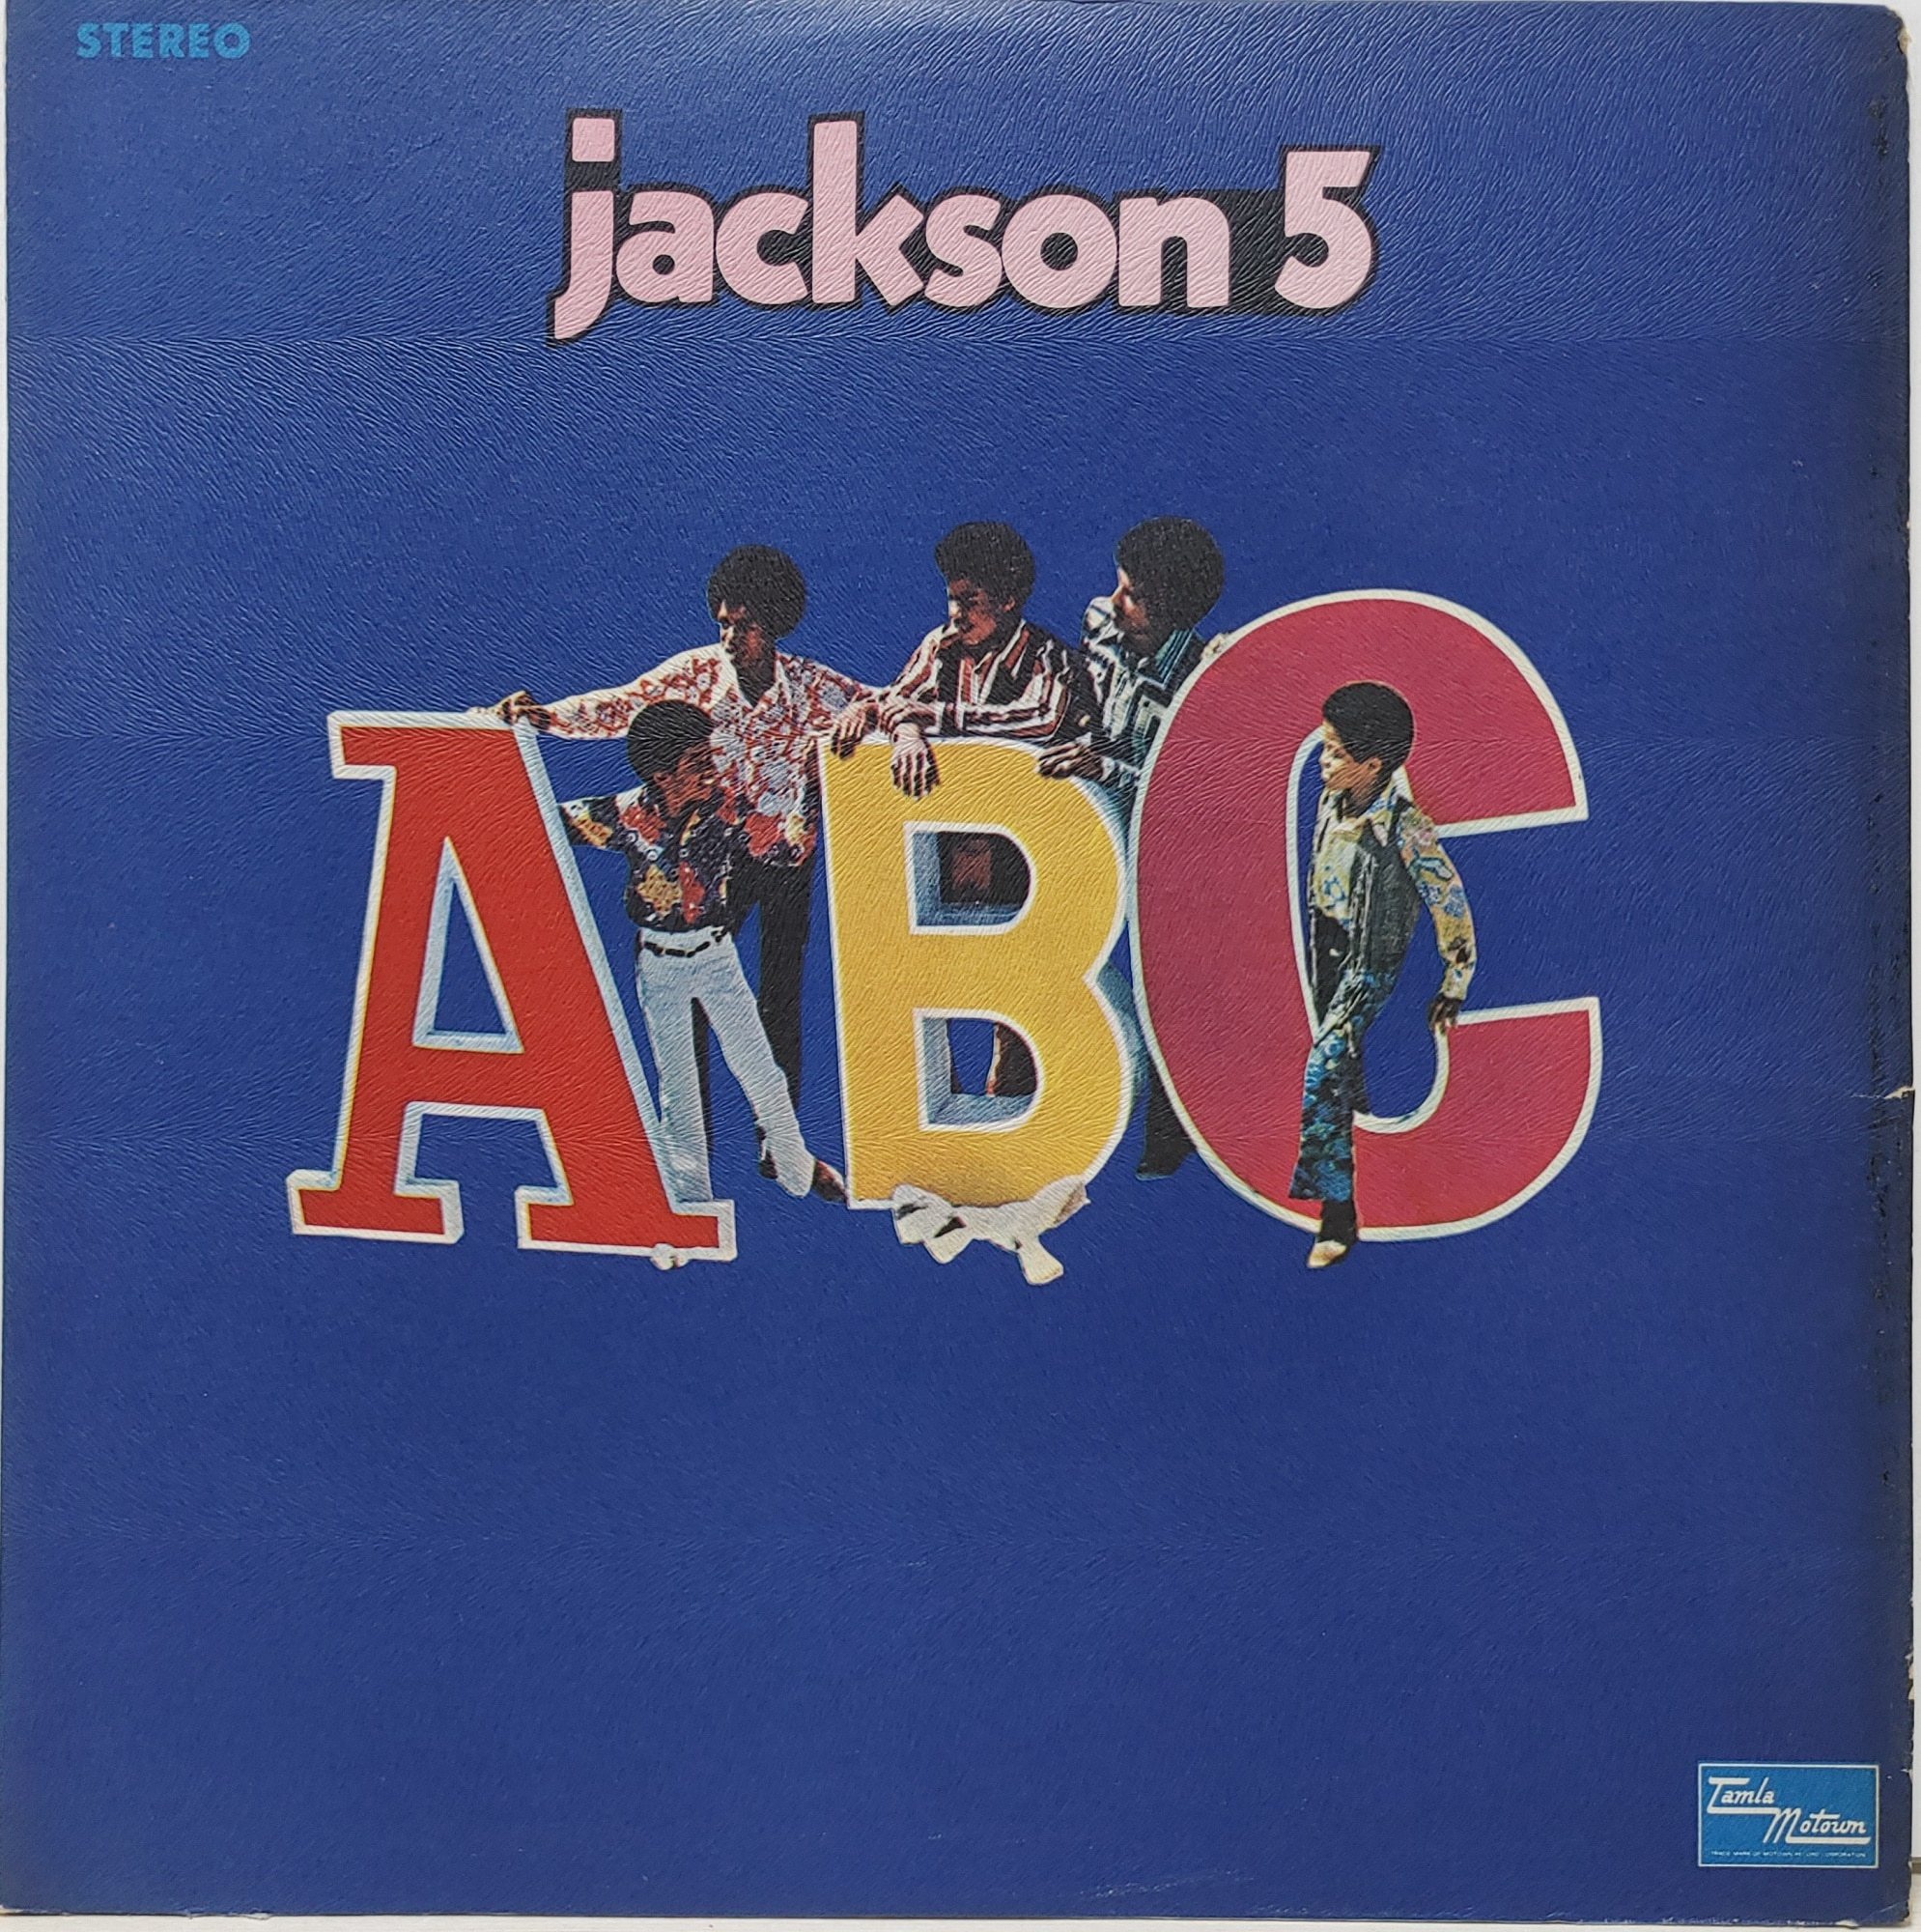 Jackson 5 / ABC